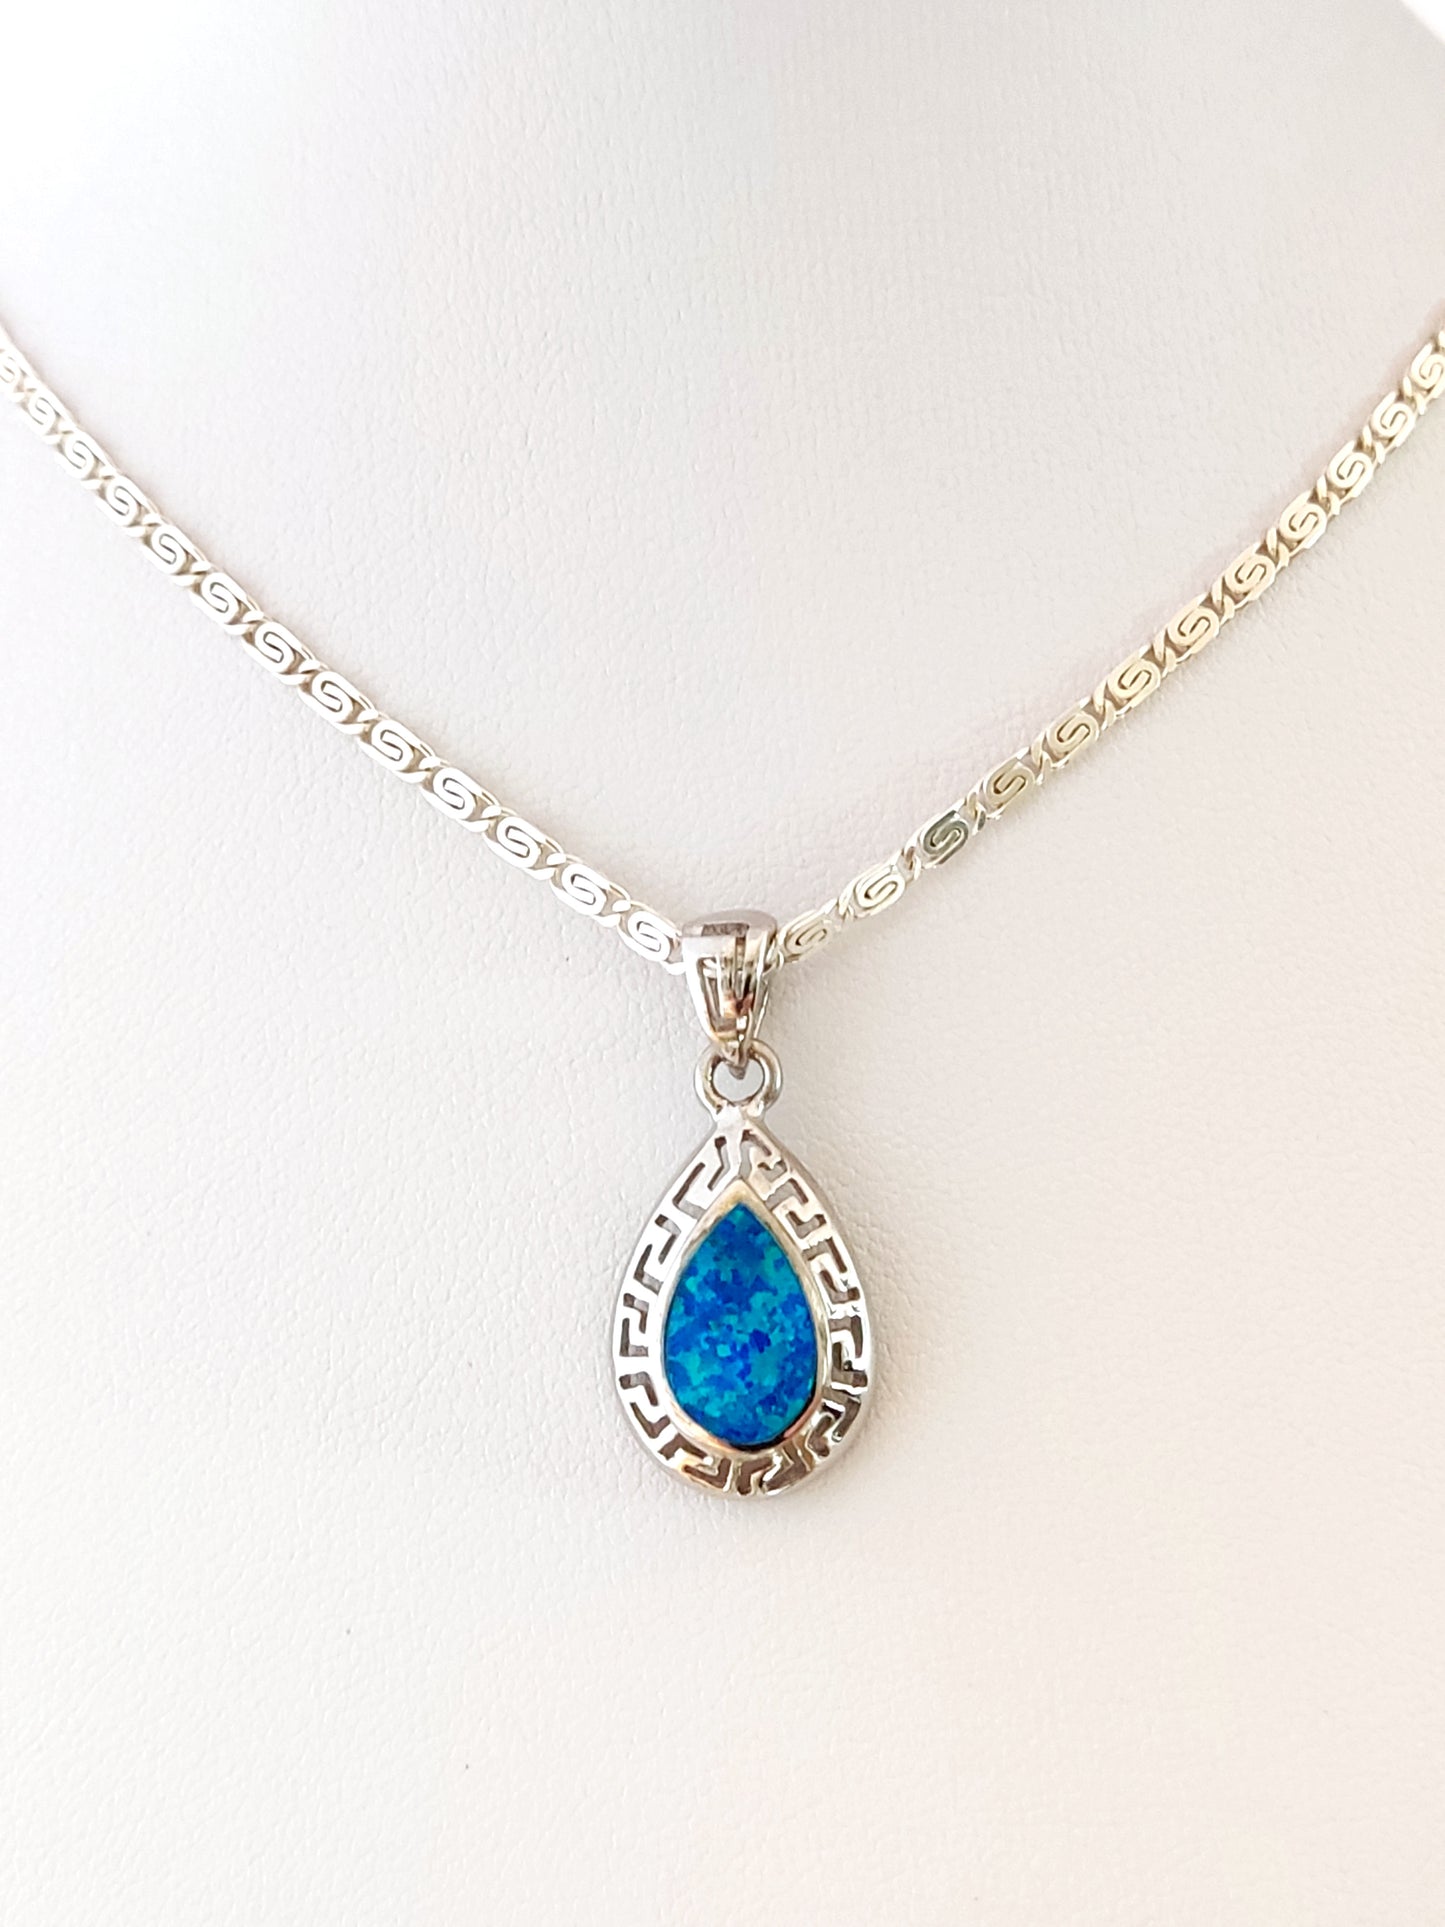 Blue Opal Silver Necklace With Drop Shape Pendant